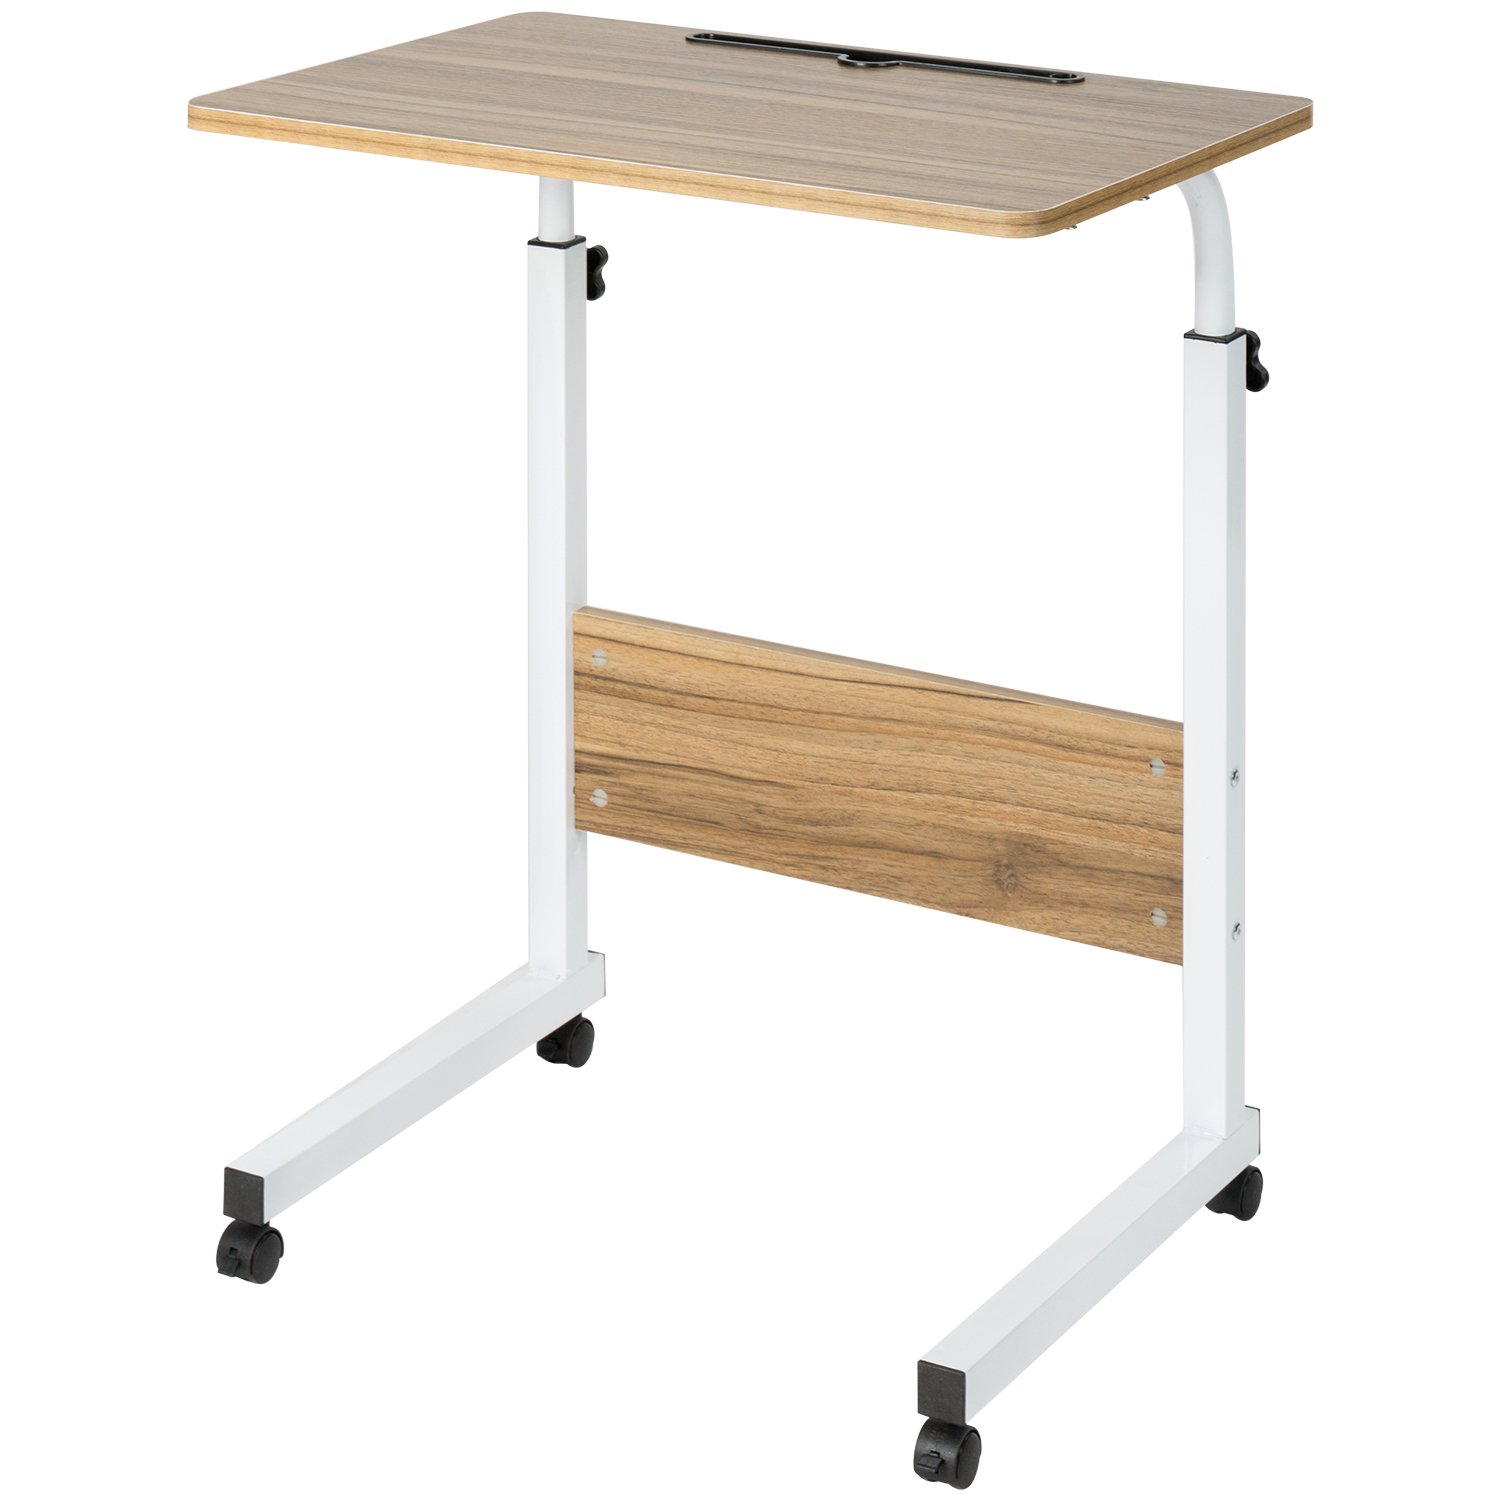 DOEWORKS Side Table, Standing Computer Desk, Adjustable Laptop Stand Portable Cart Tray Side Table, Ancient Oak